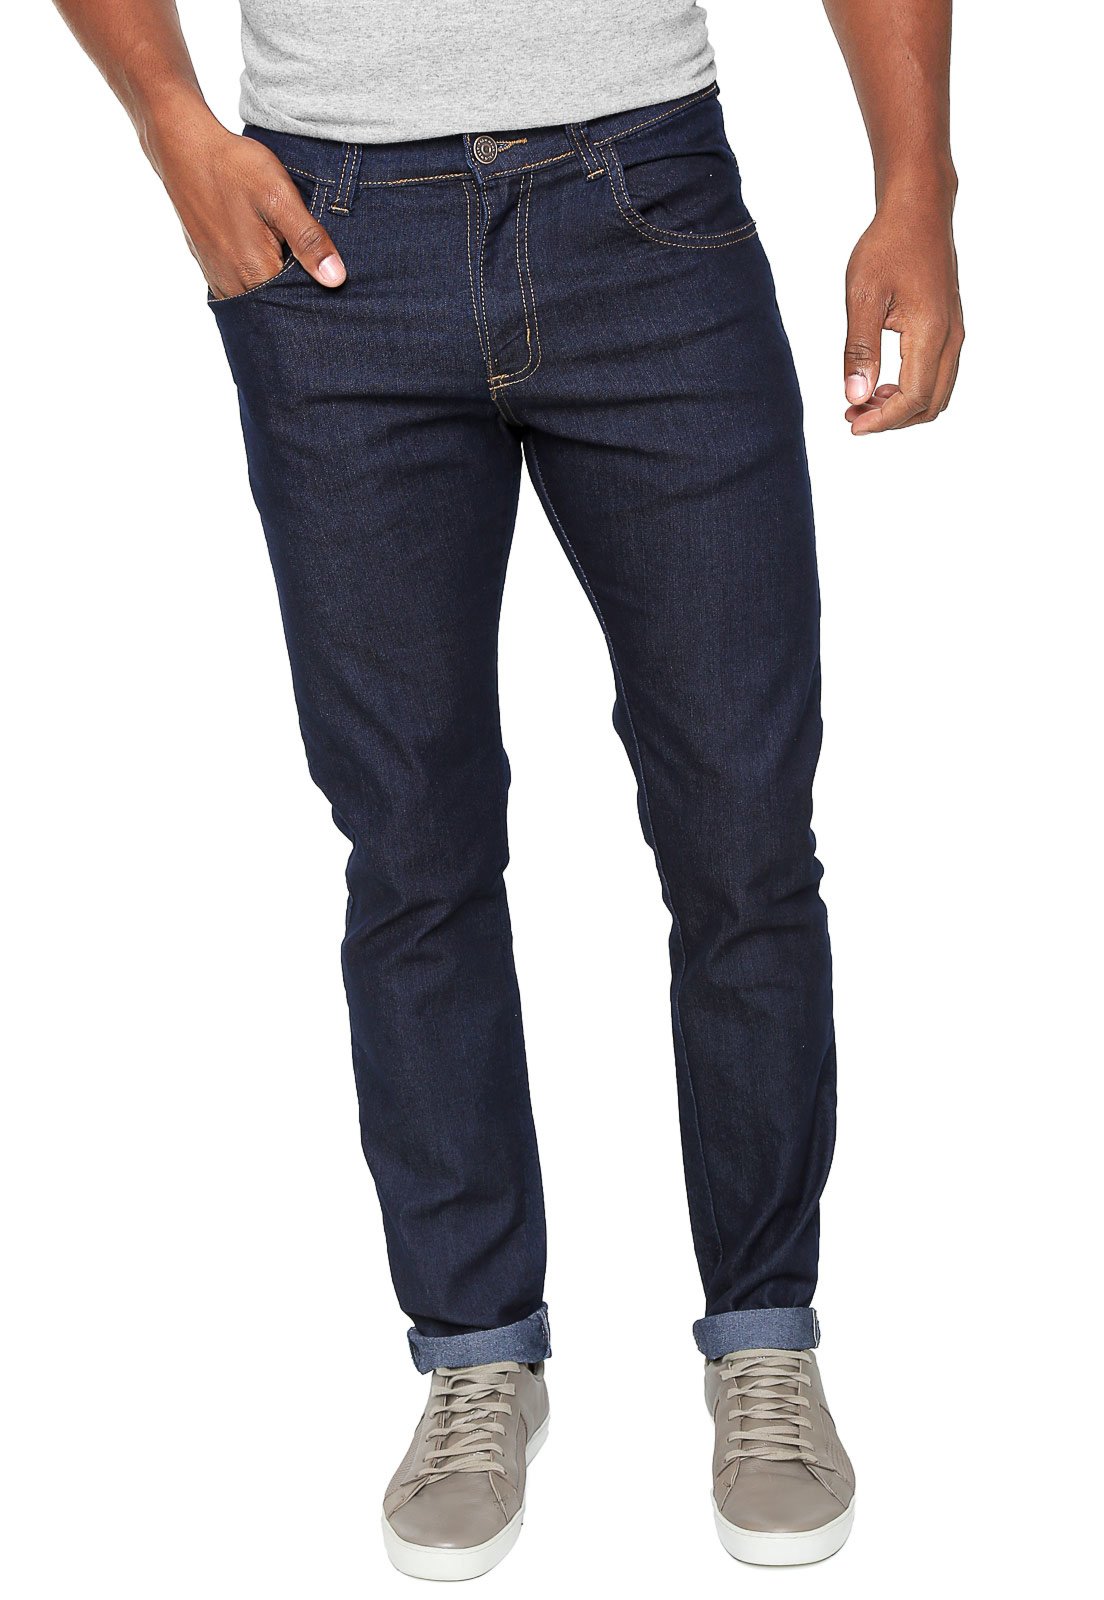 calças jeans masculina polo wear